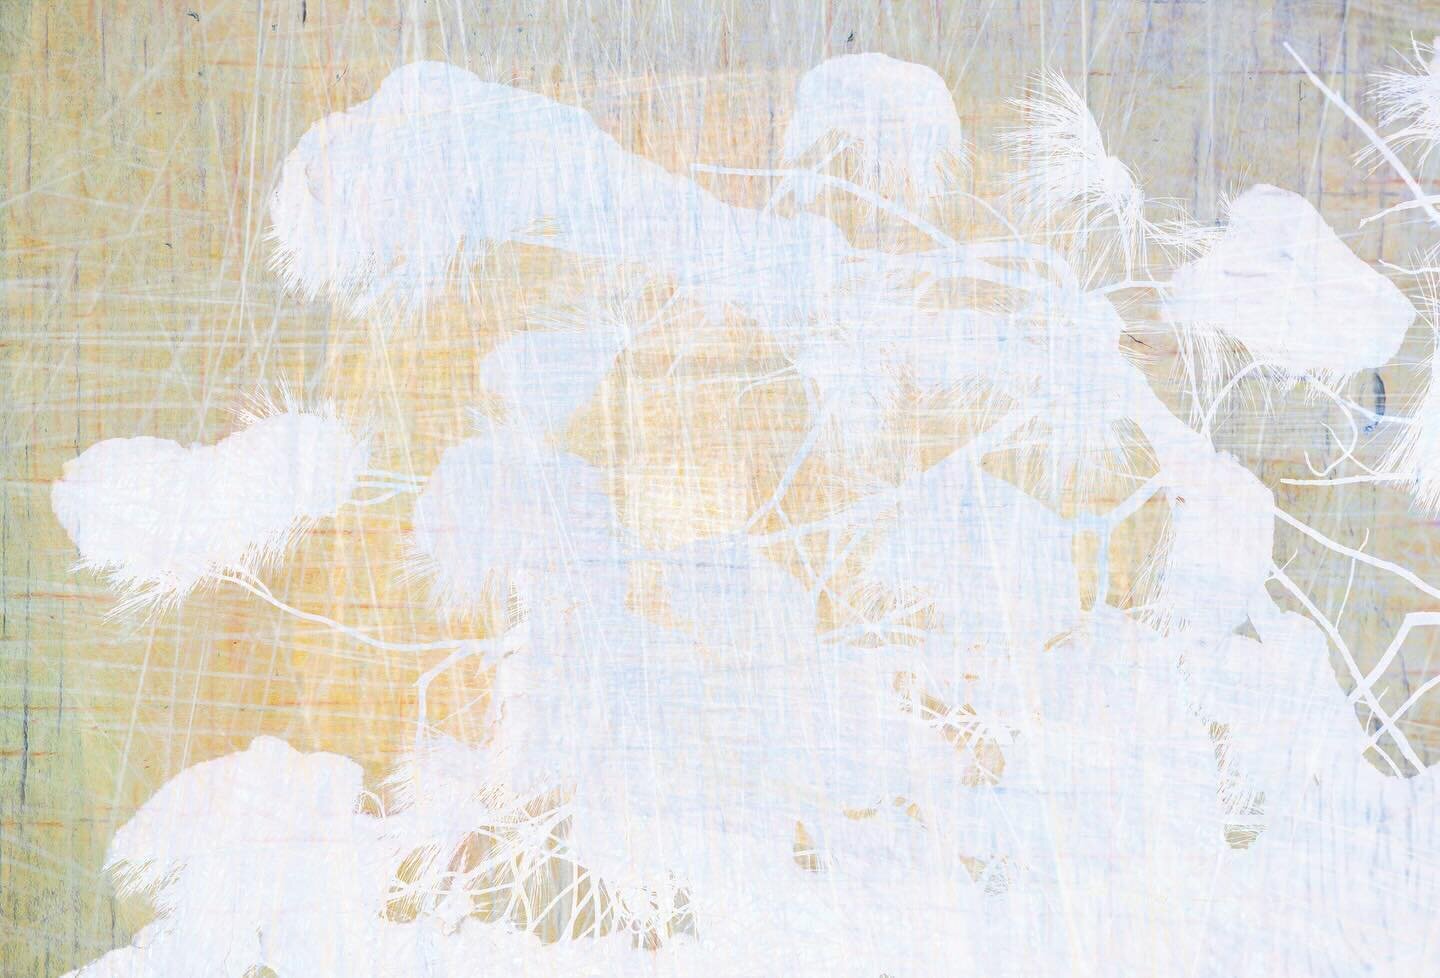 #snow on #pineneedles #abstractphotographyart #abstractphotography #multipleexposurephotography #cdnart #layeredphotography #nikon_canada #nikond850📷 #creativephotography #photocollageart #contemporaryart #canadianphotographers #whitepine #groupofse